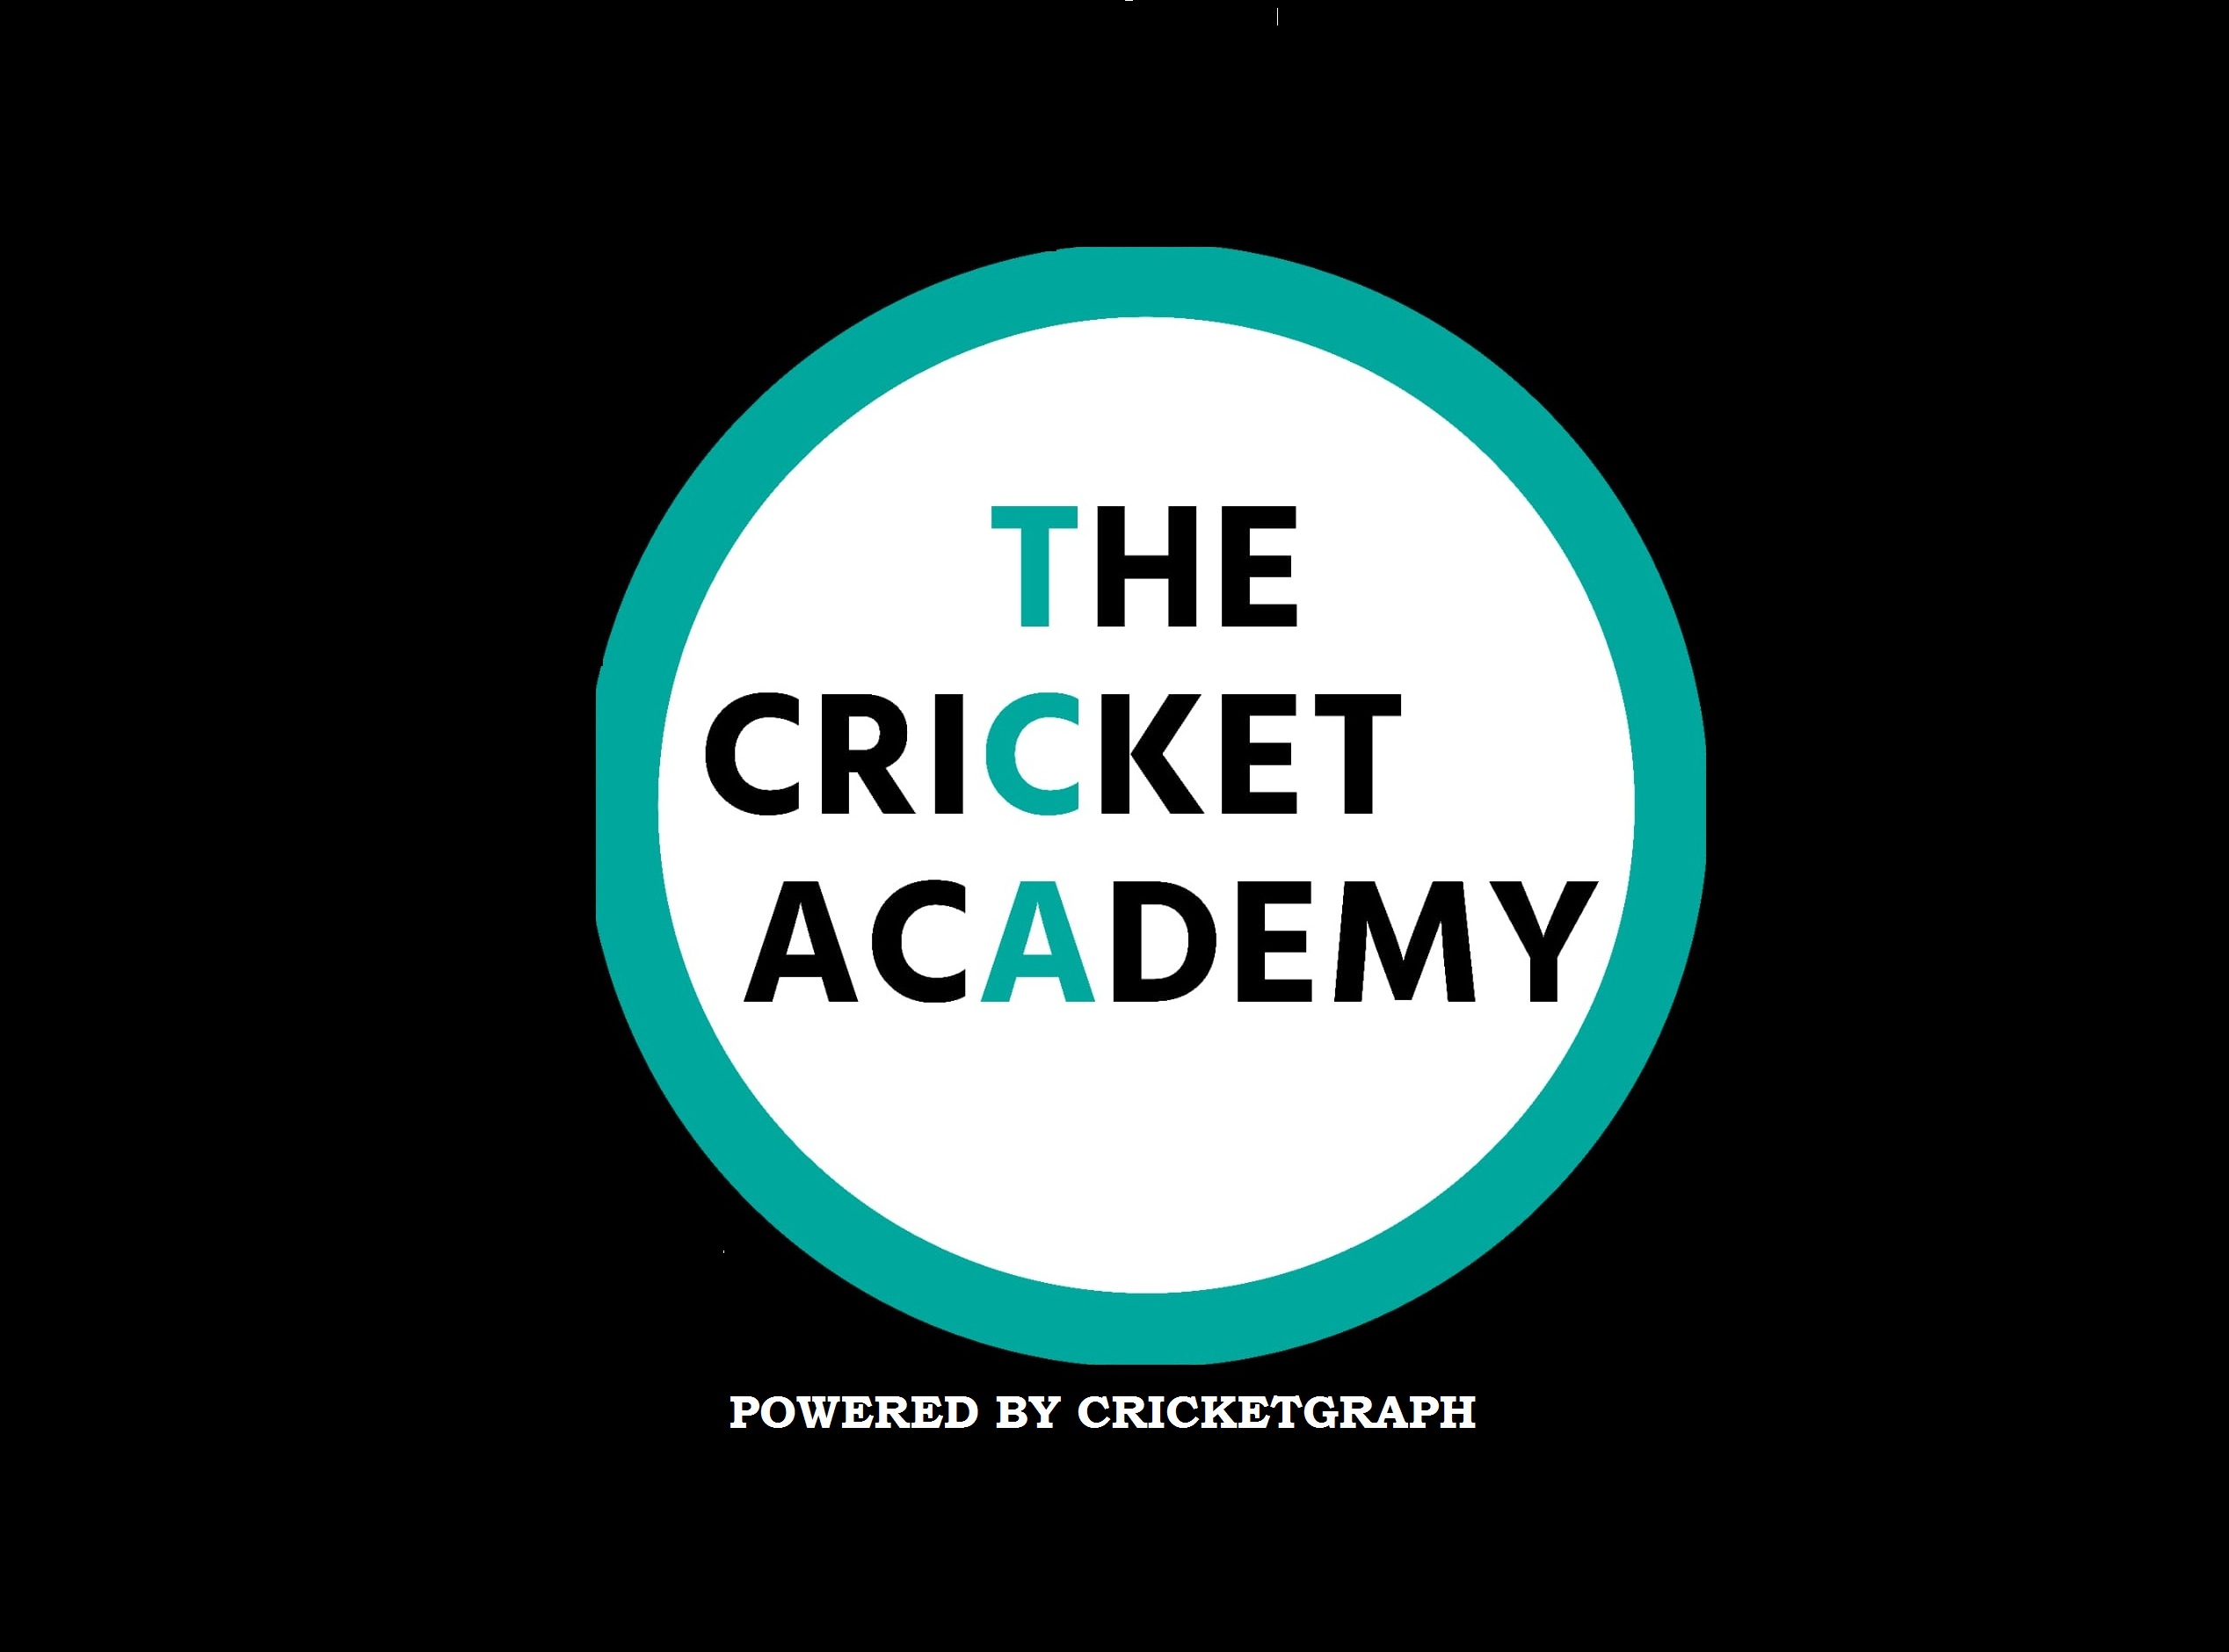 The Cricket Academy in Noida